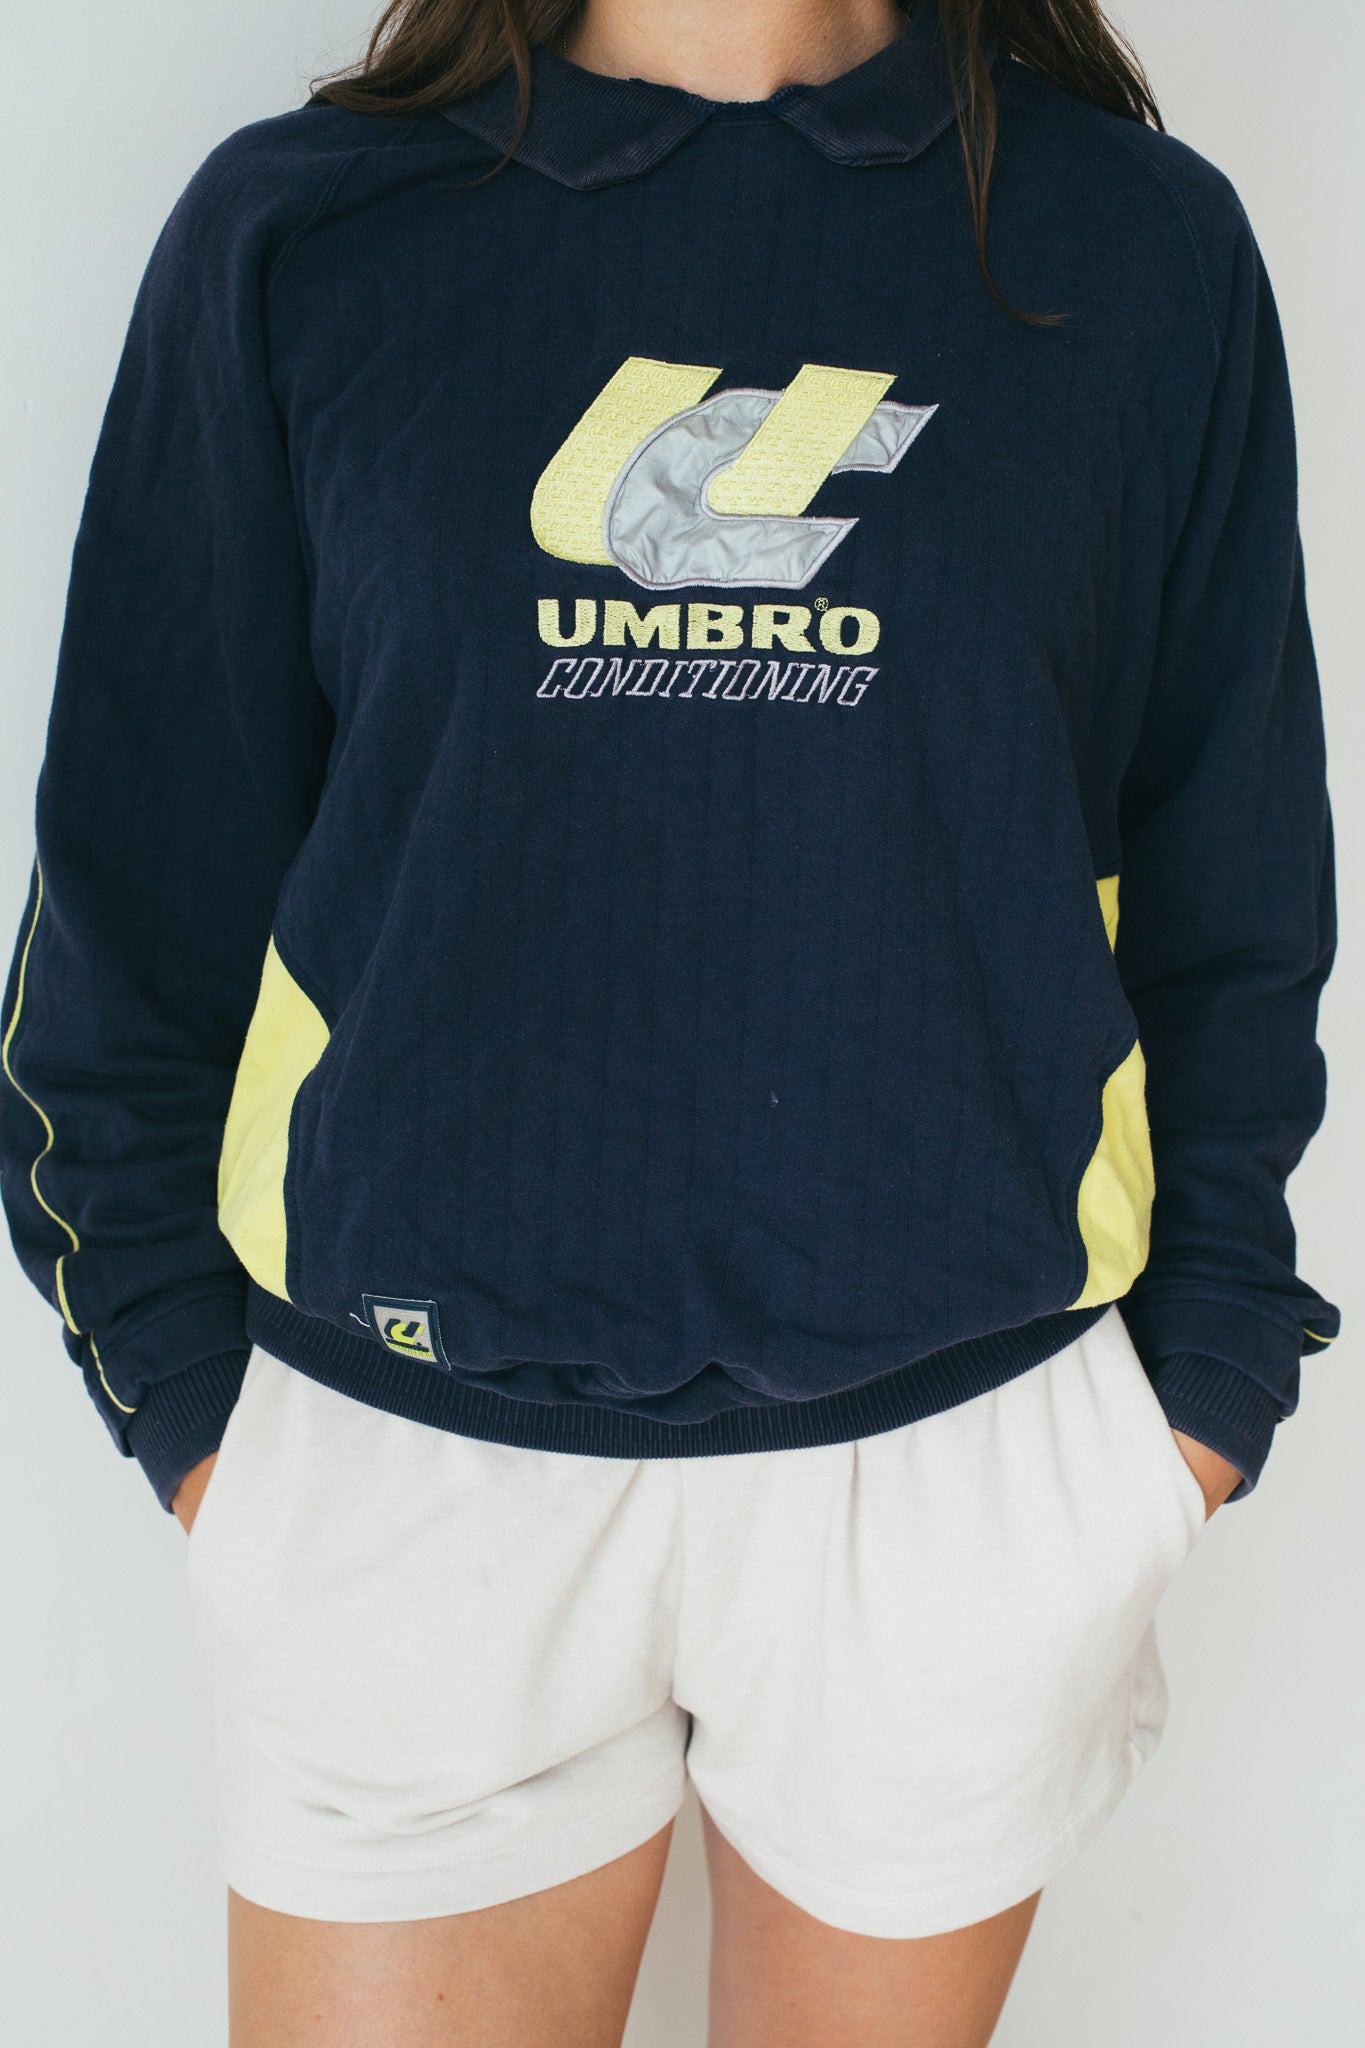 Umbro Conditioning - Sweatshirt